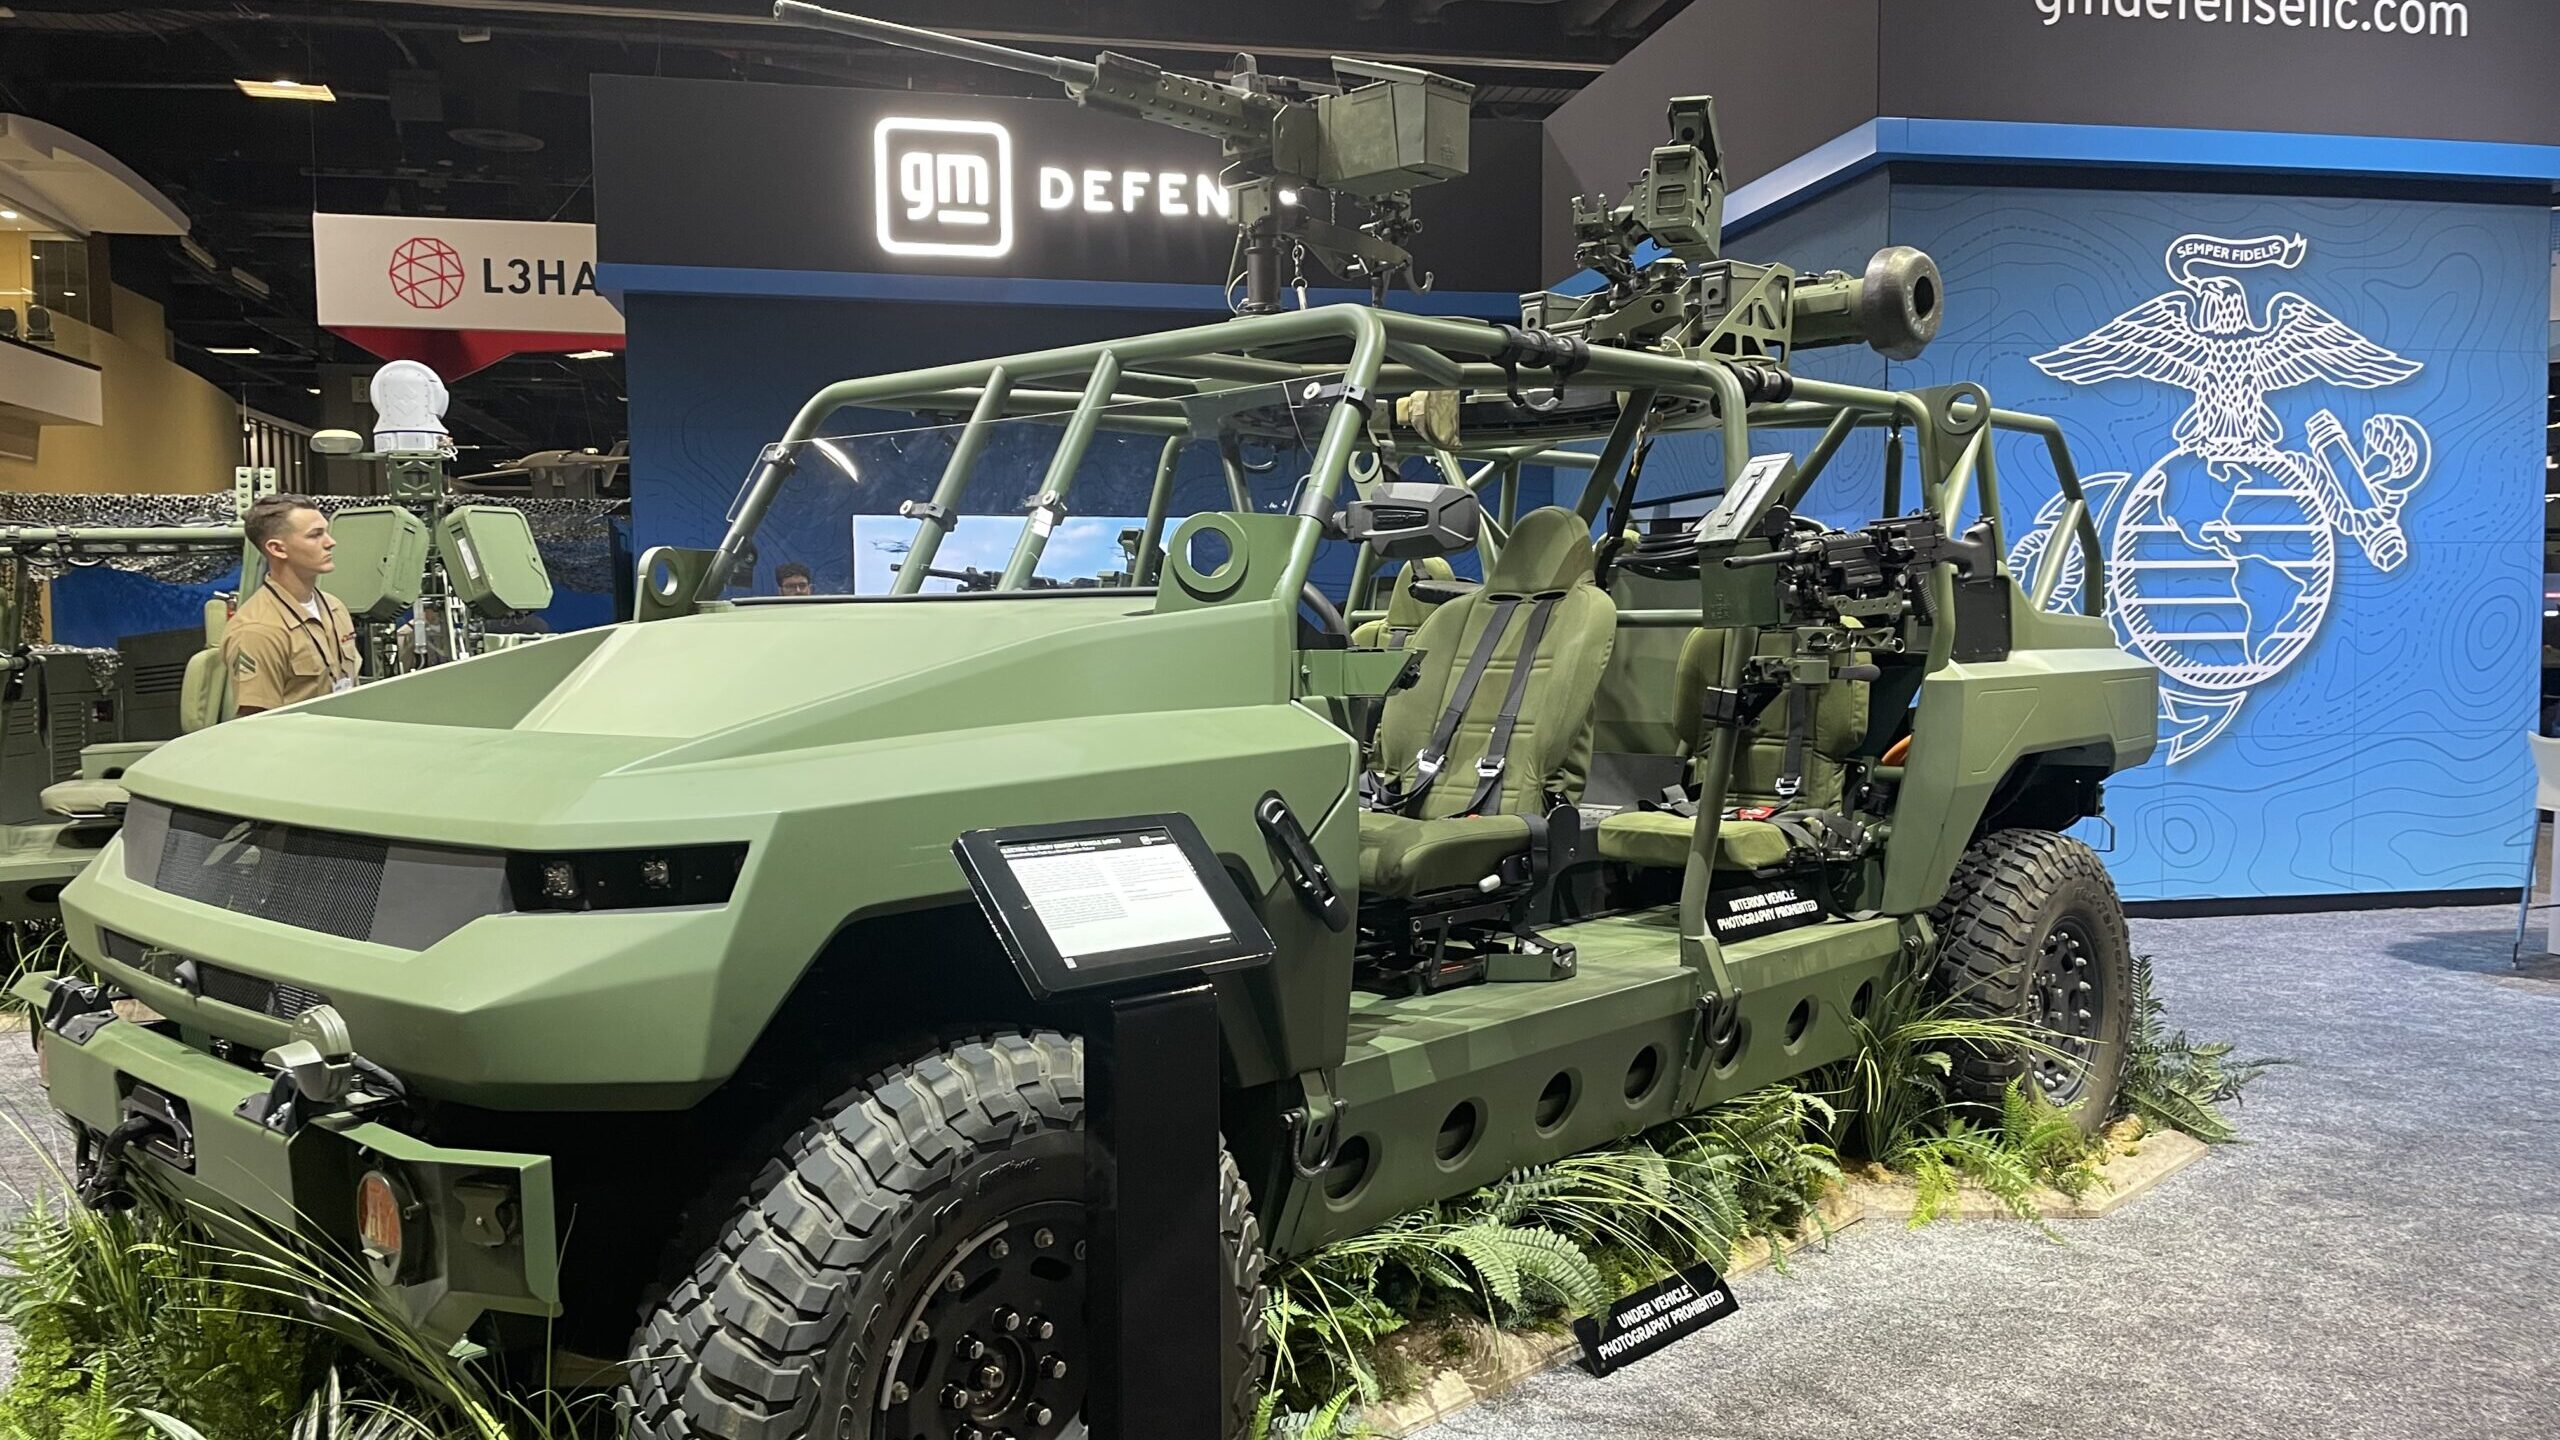 GM Defense displays modified Hummer EV design for military